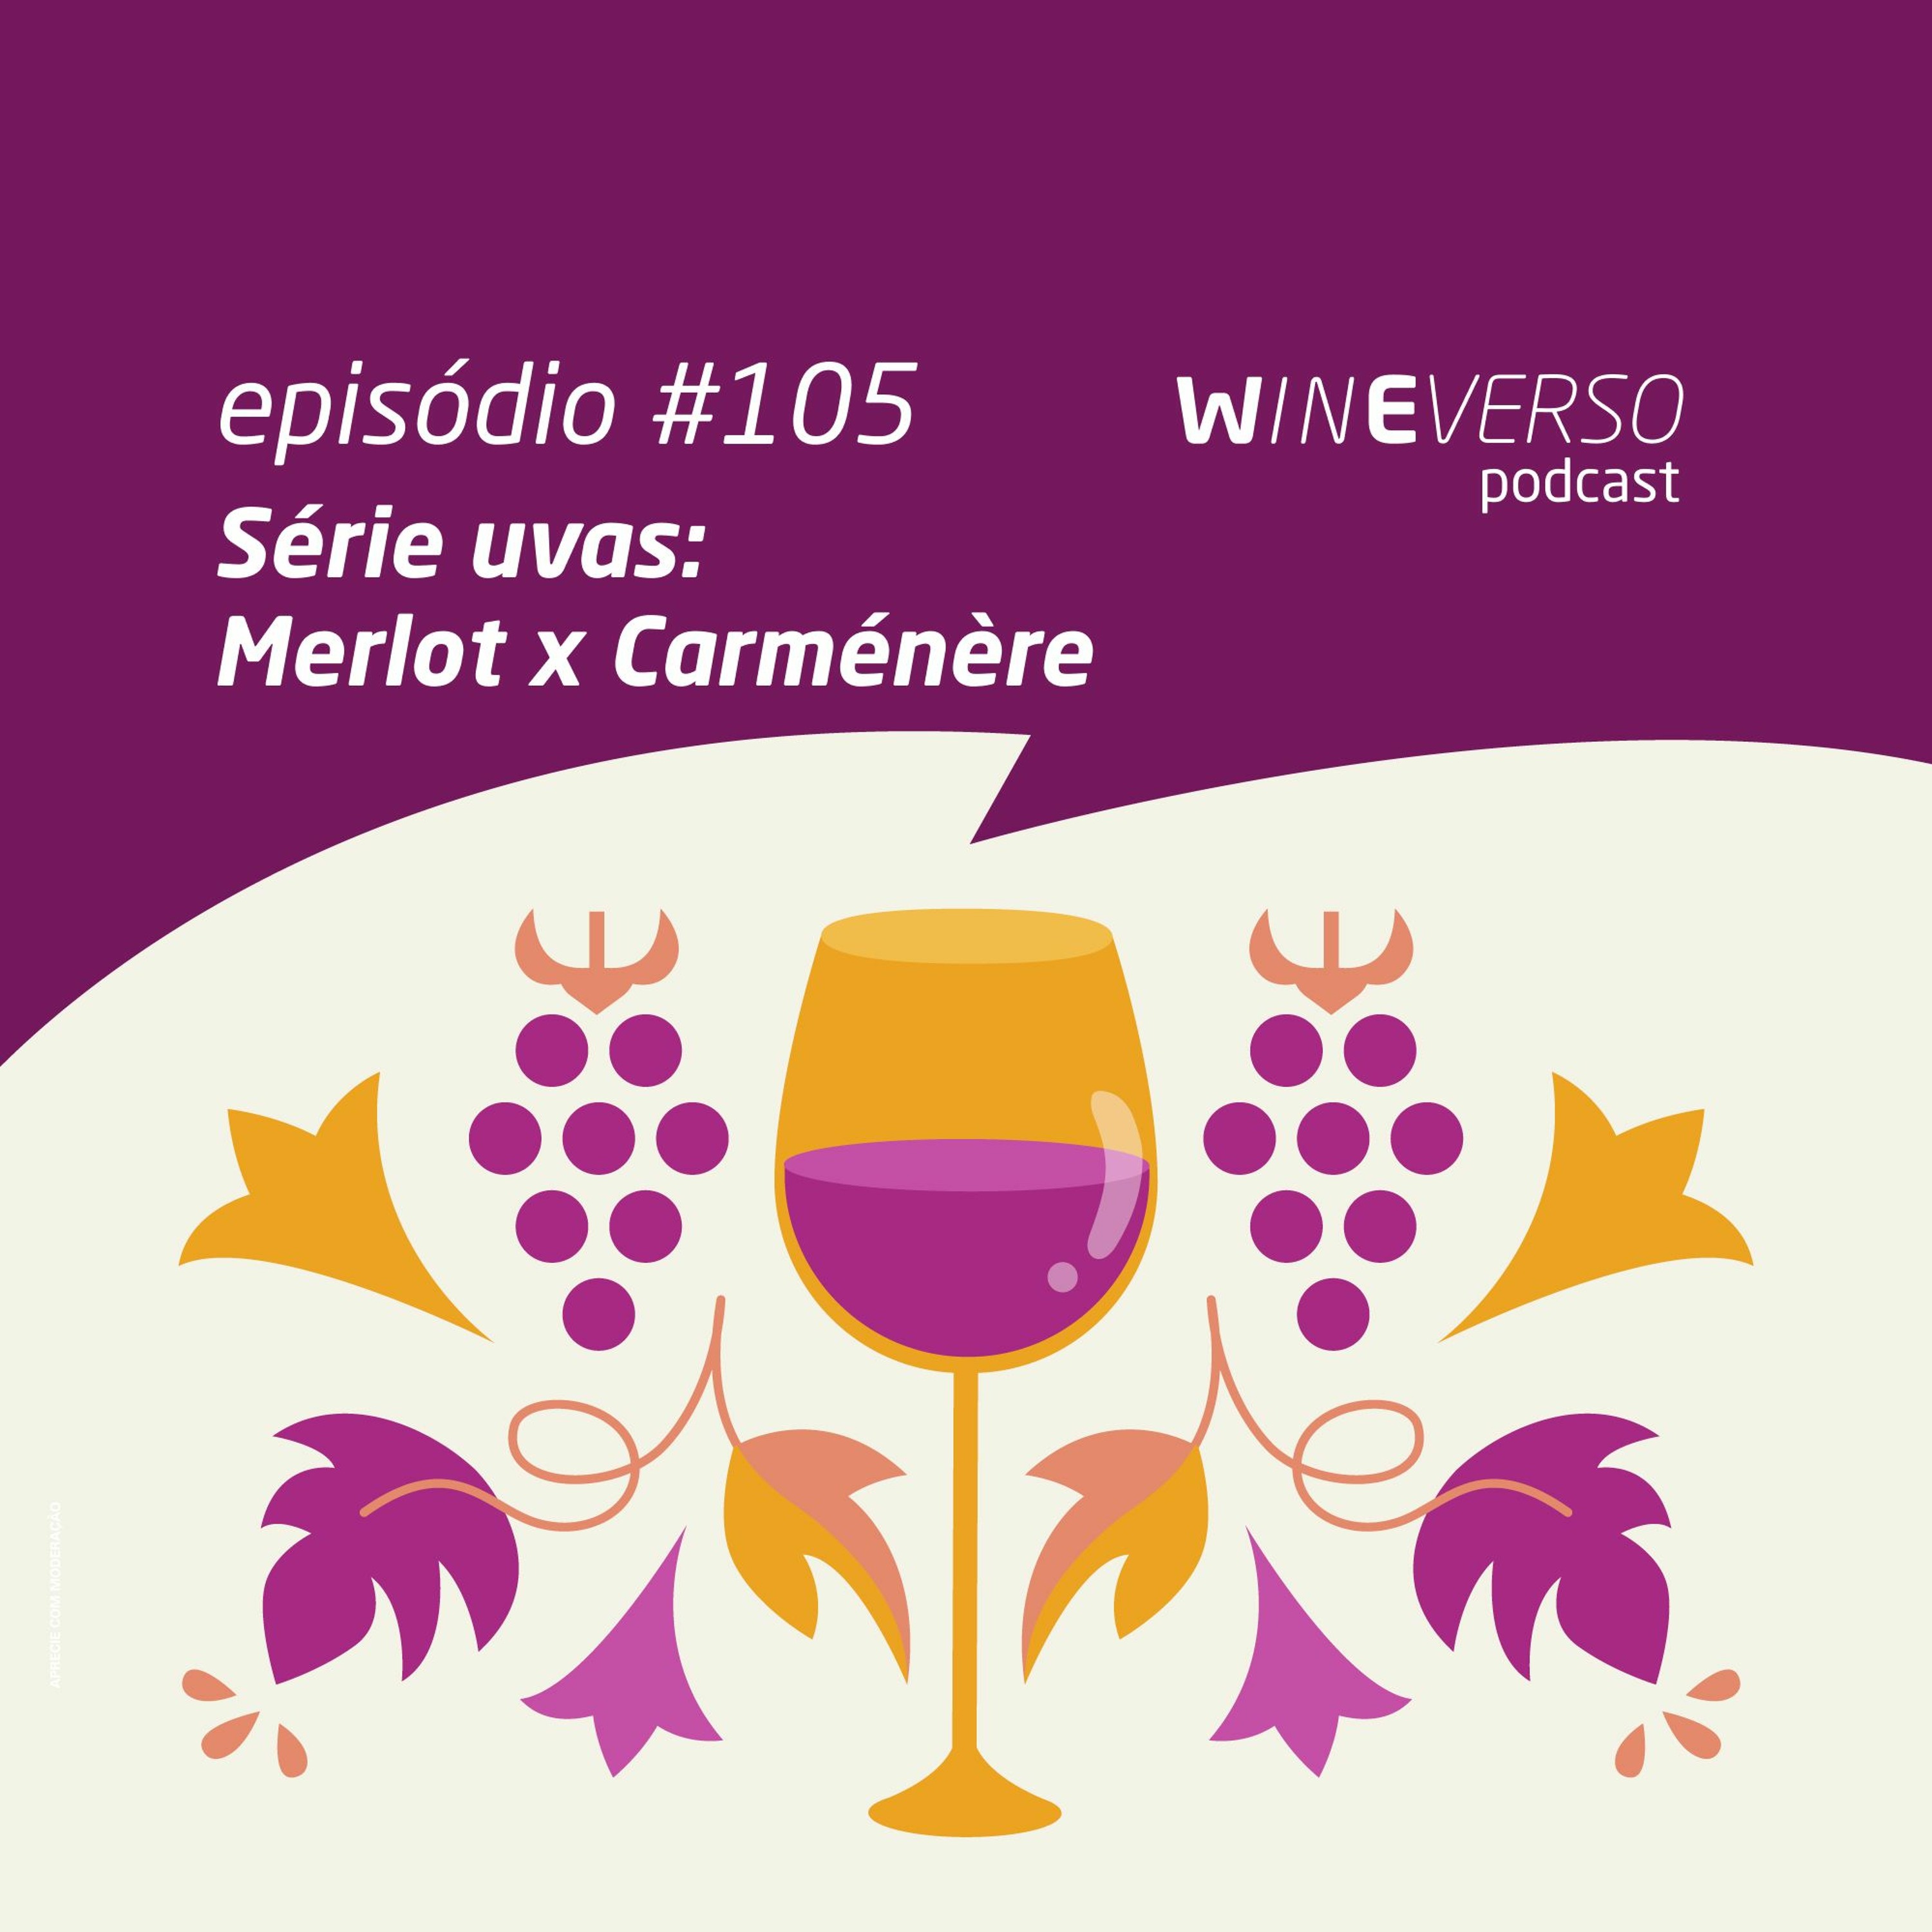 Série uvas: Merlot x Carménère